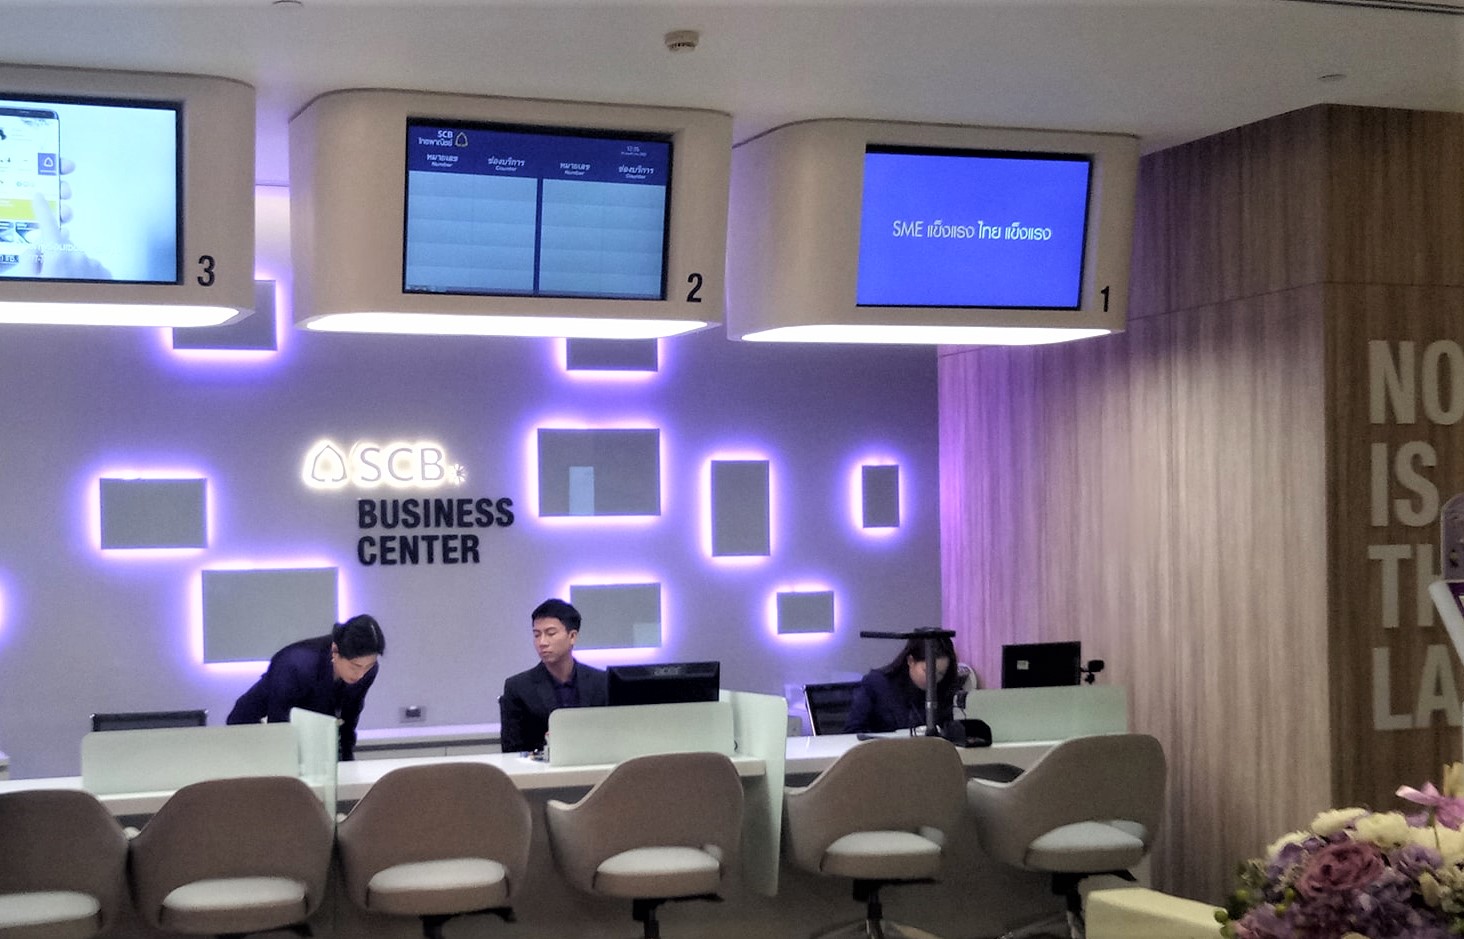 SCB Business Center